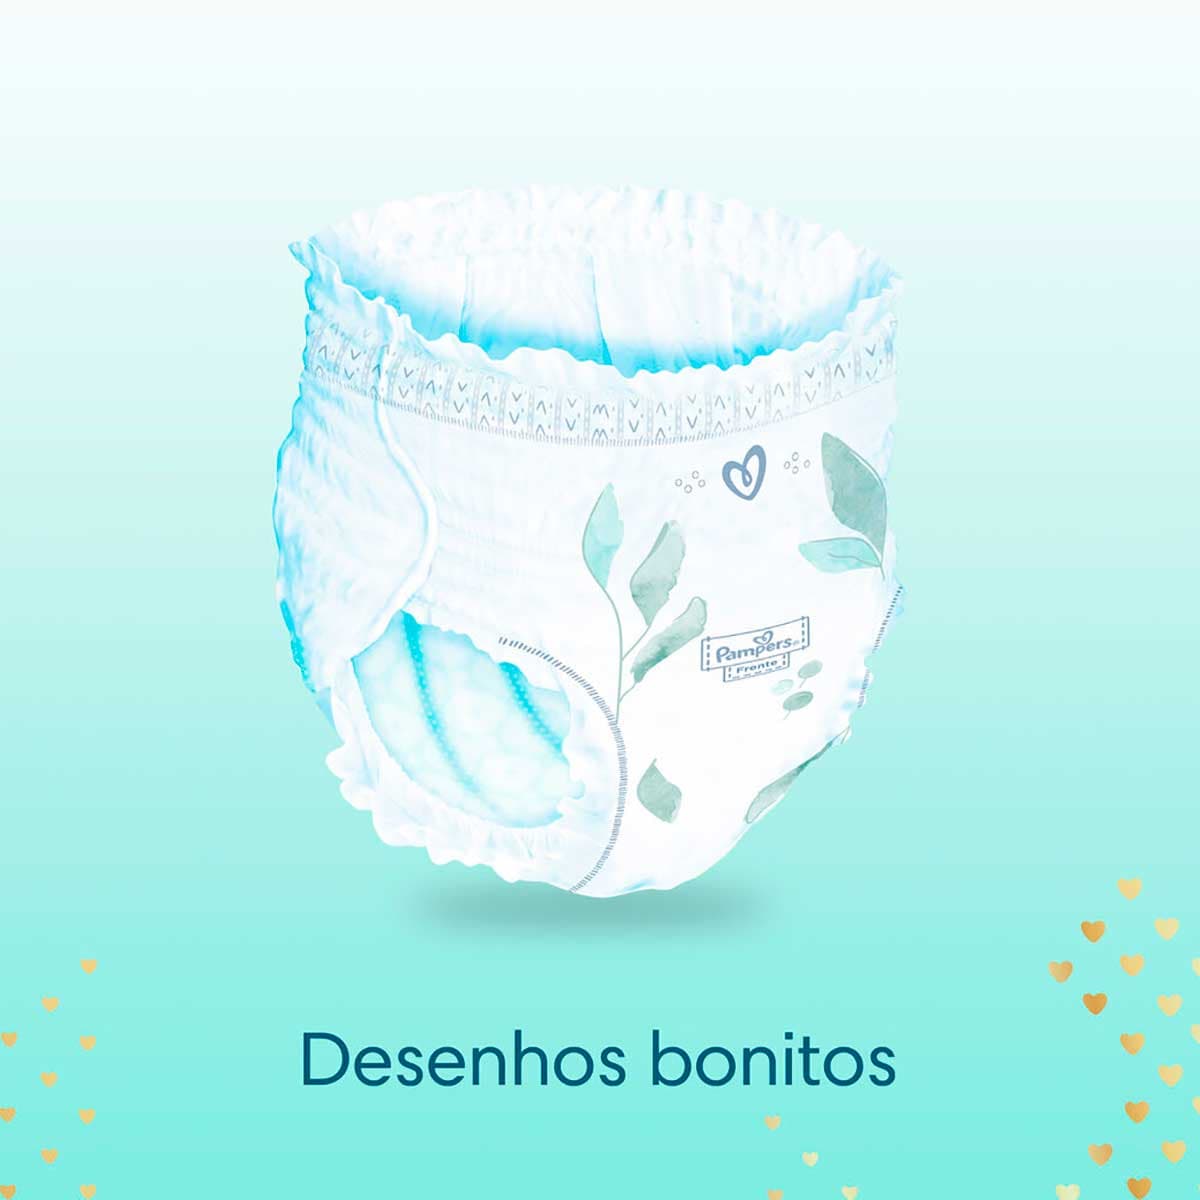 Fralda Descartável Infantil Pants Premium Care XXG Pampers Pacote com 90  Unidades - Sam's Club